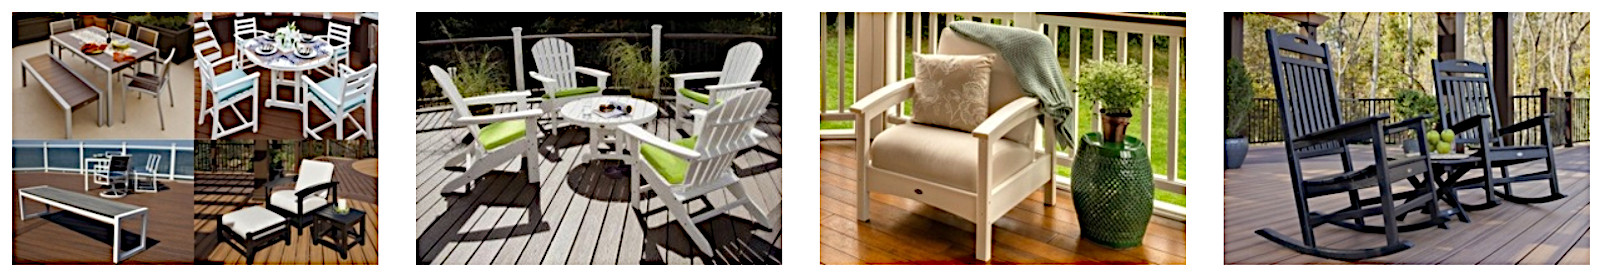 Good Deals Trex outdoor furniture